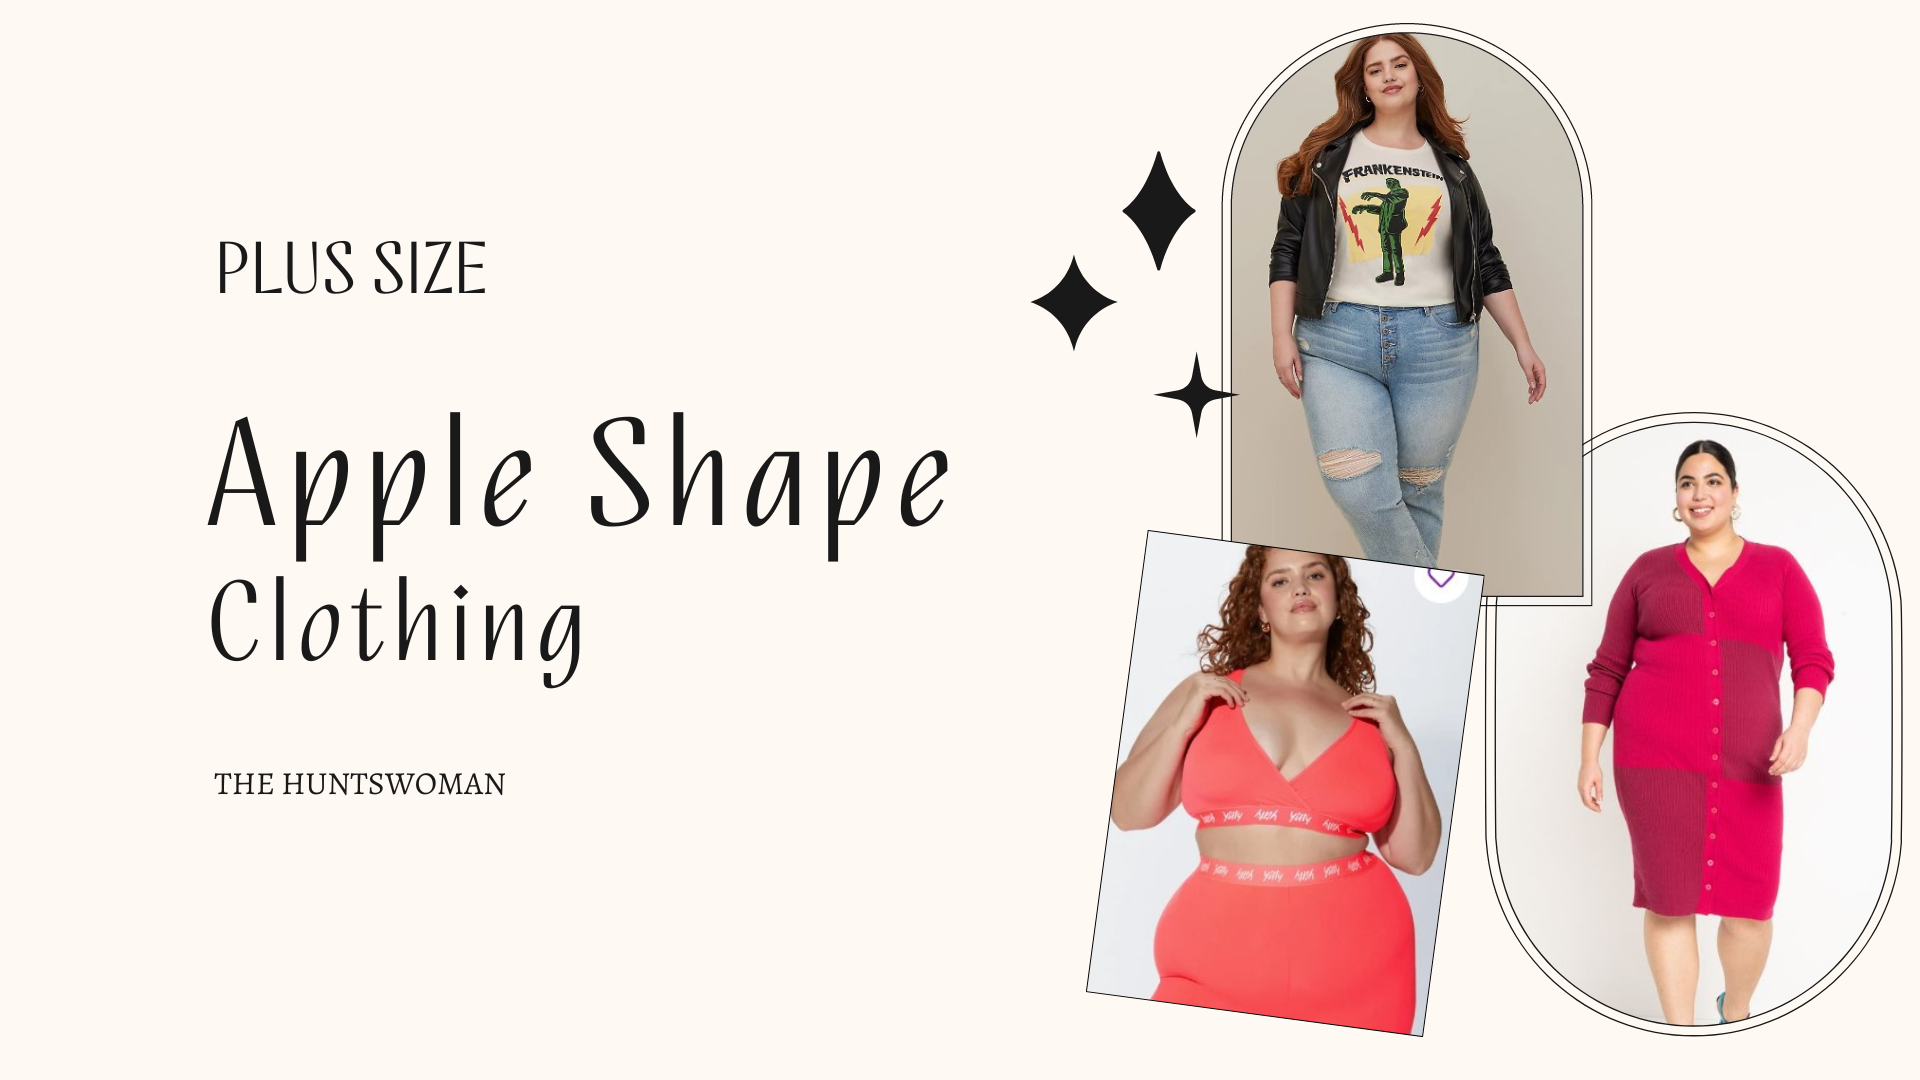 3 Easy Ways to Dress an Apple Shape Body - wikiHow